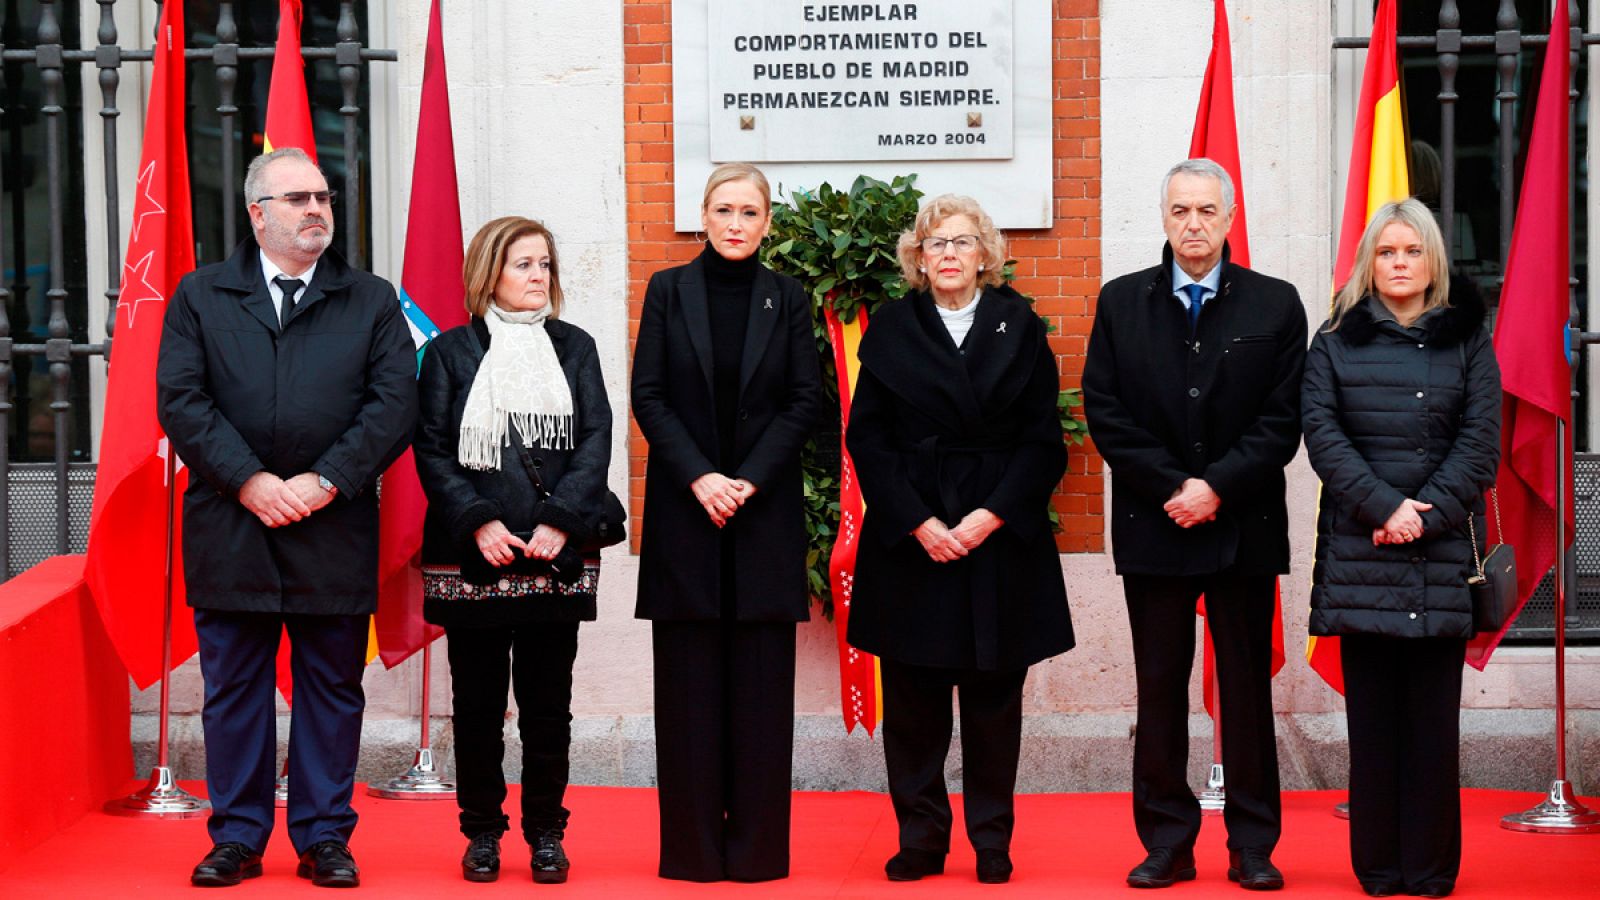 11M: homenaje institucional a las víctimas del 11M en la Puerta del Sol